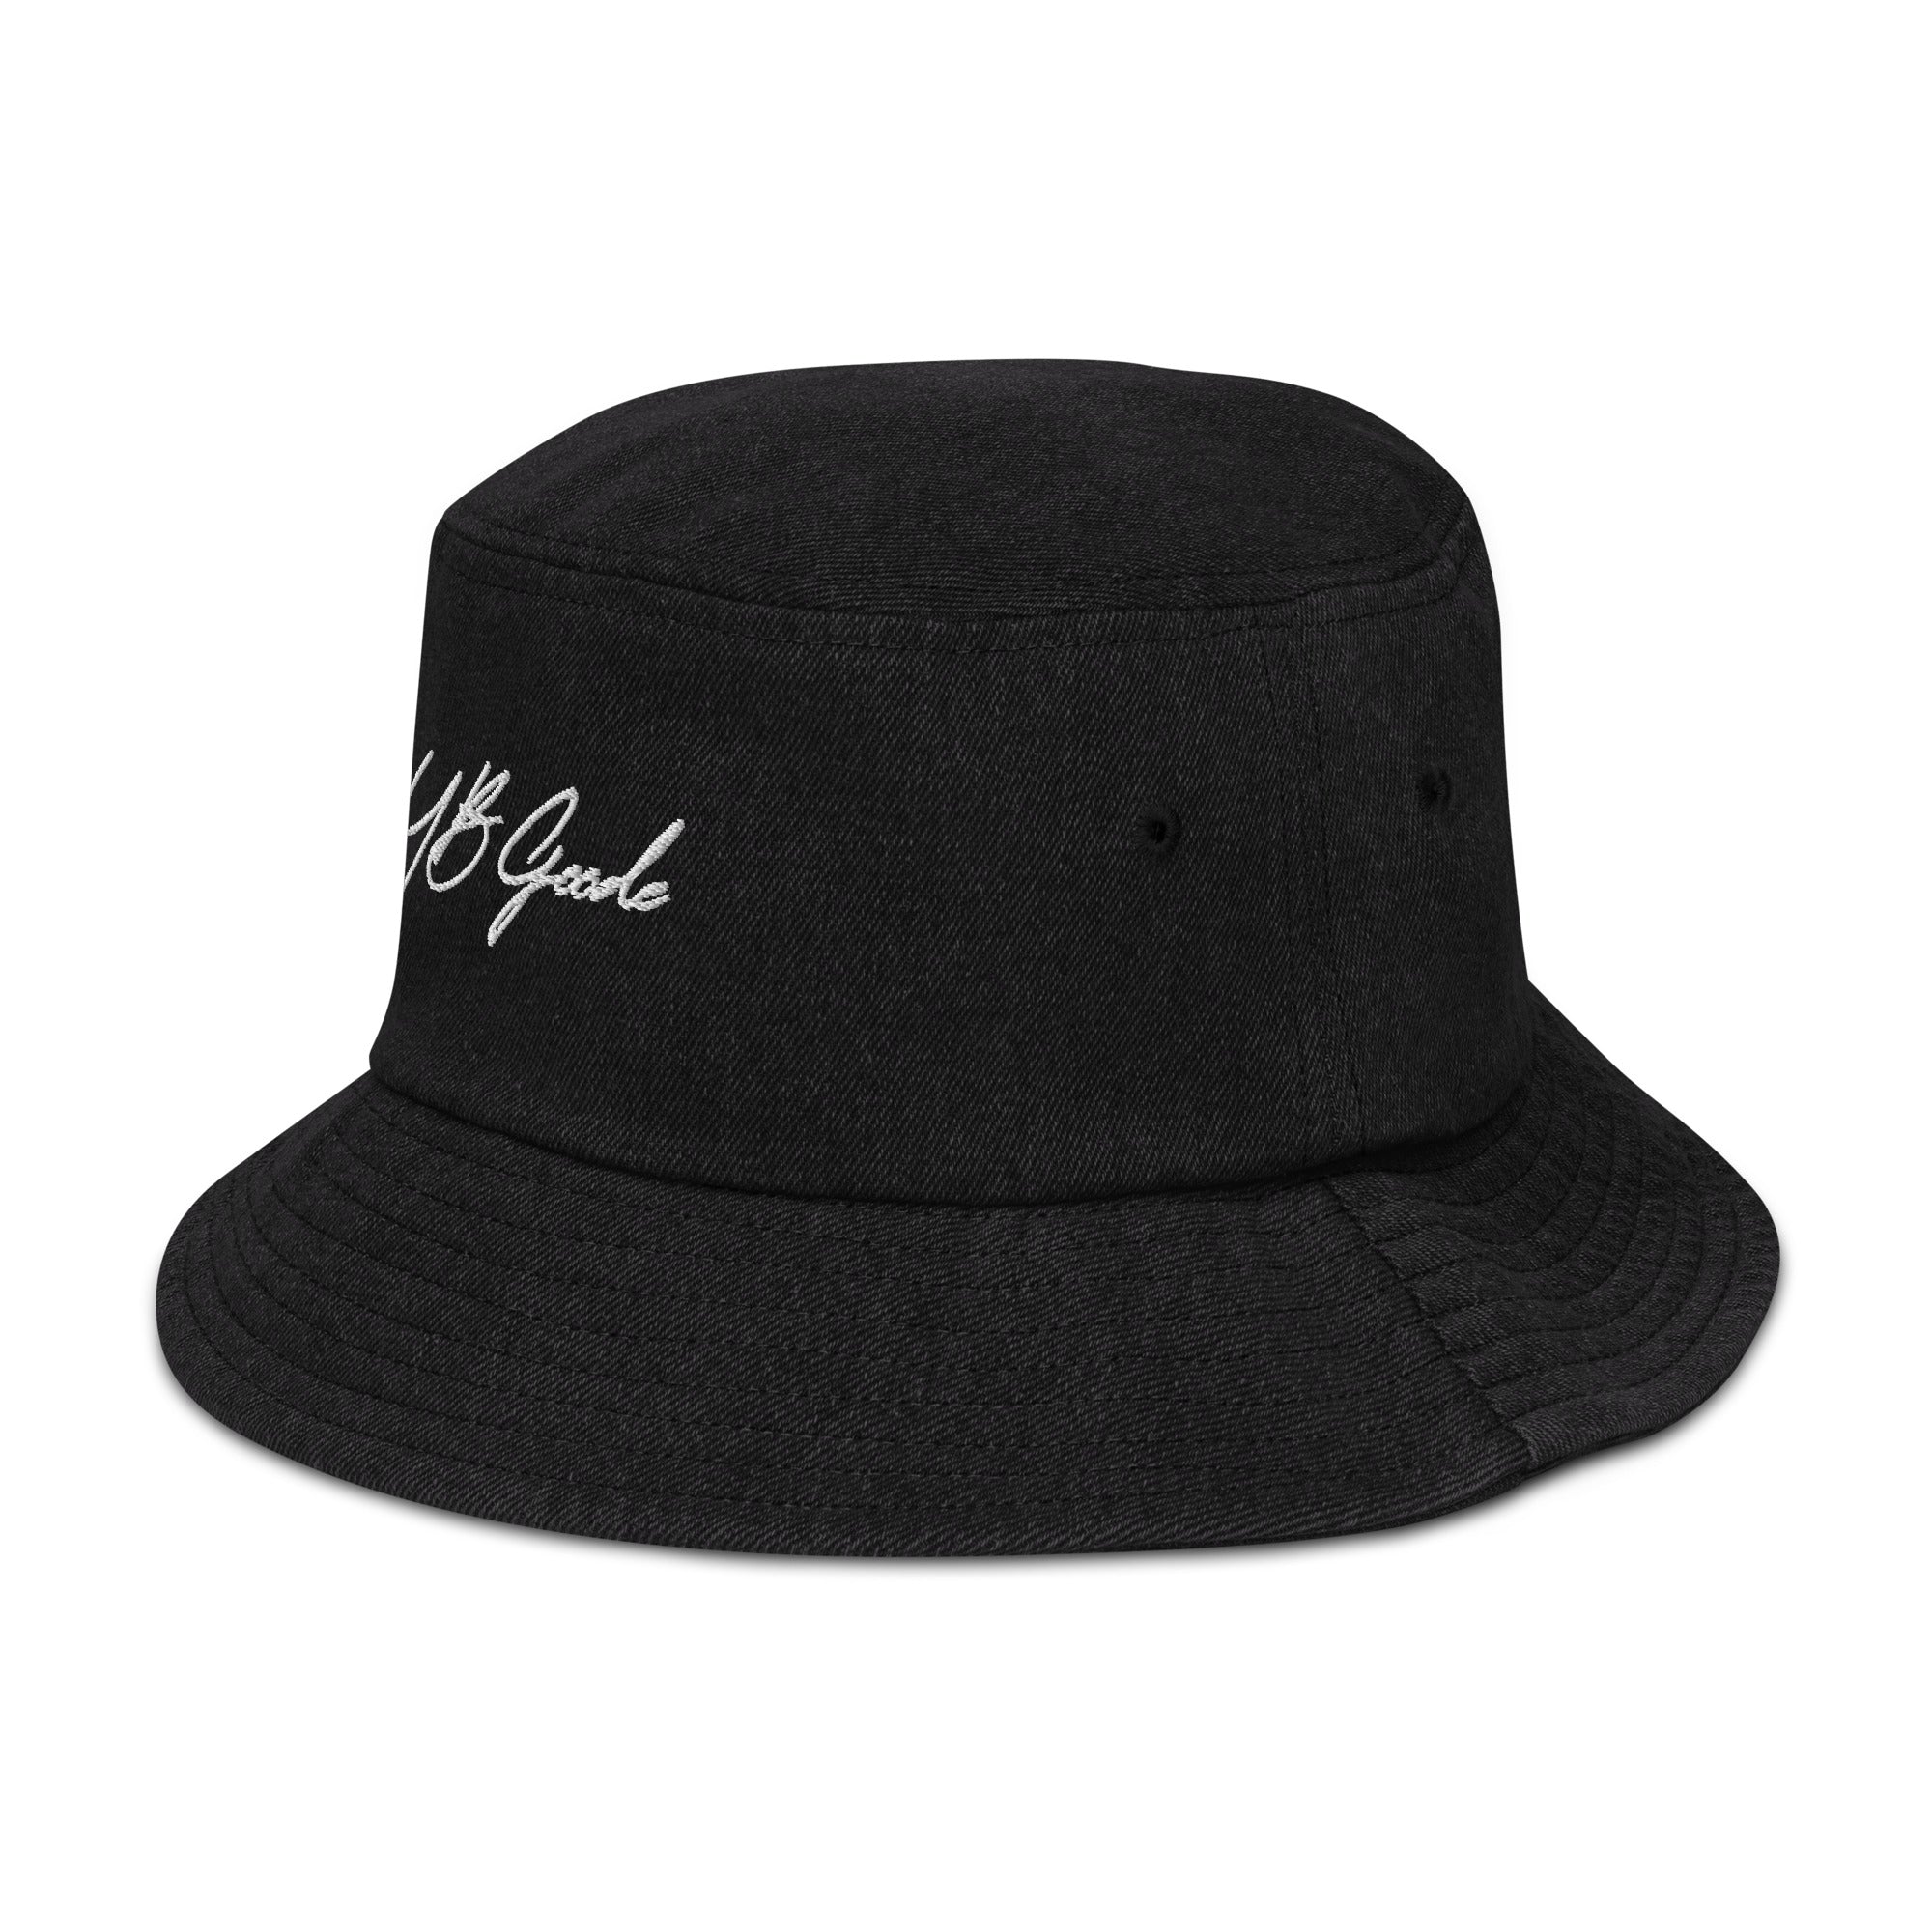 YB Goode Signature bucket hat